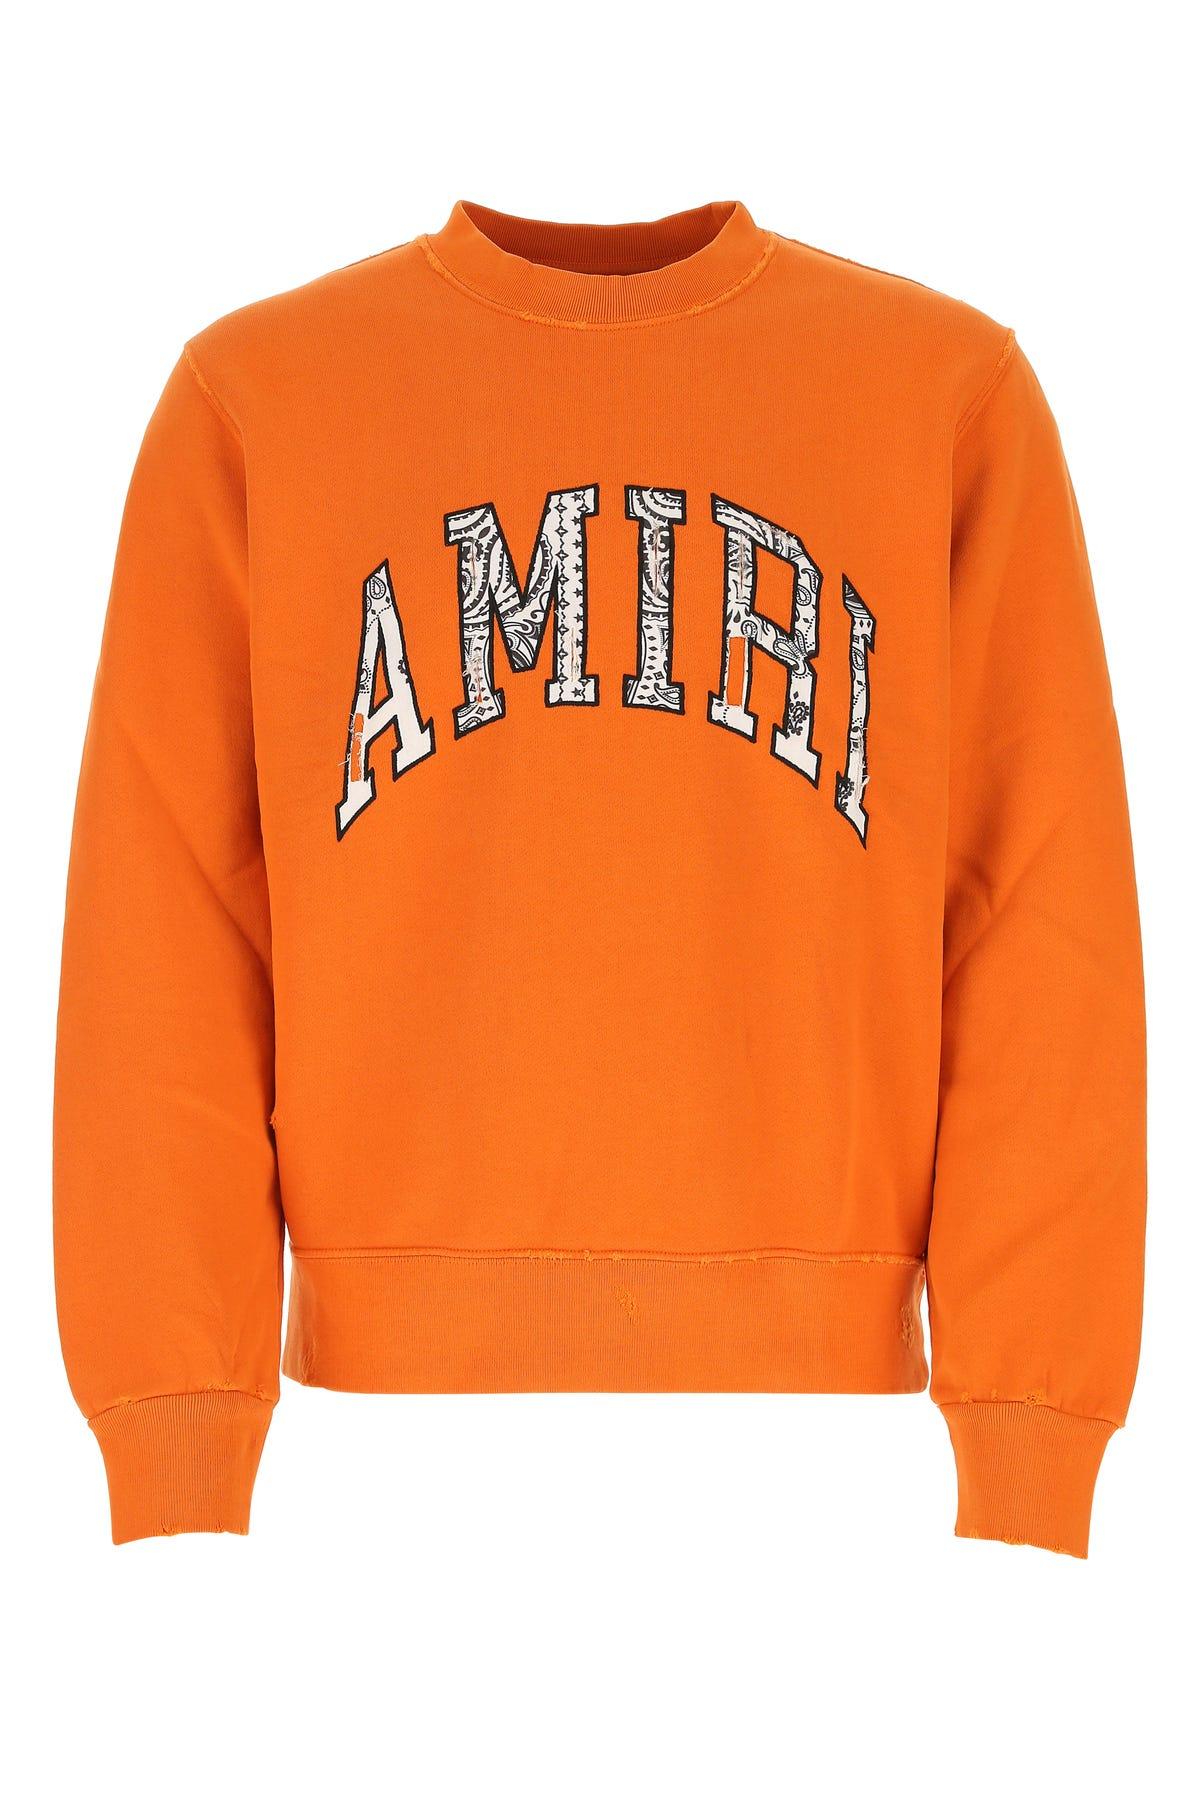 Amiri Orange Cotton Oversize Sweatshirt for Men